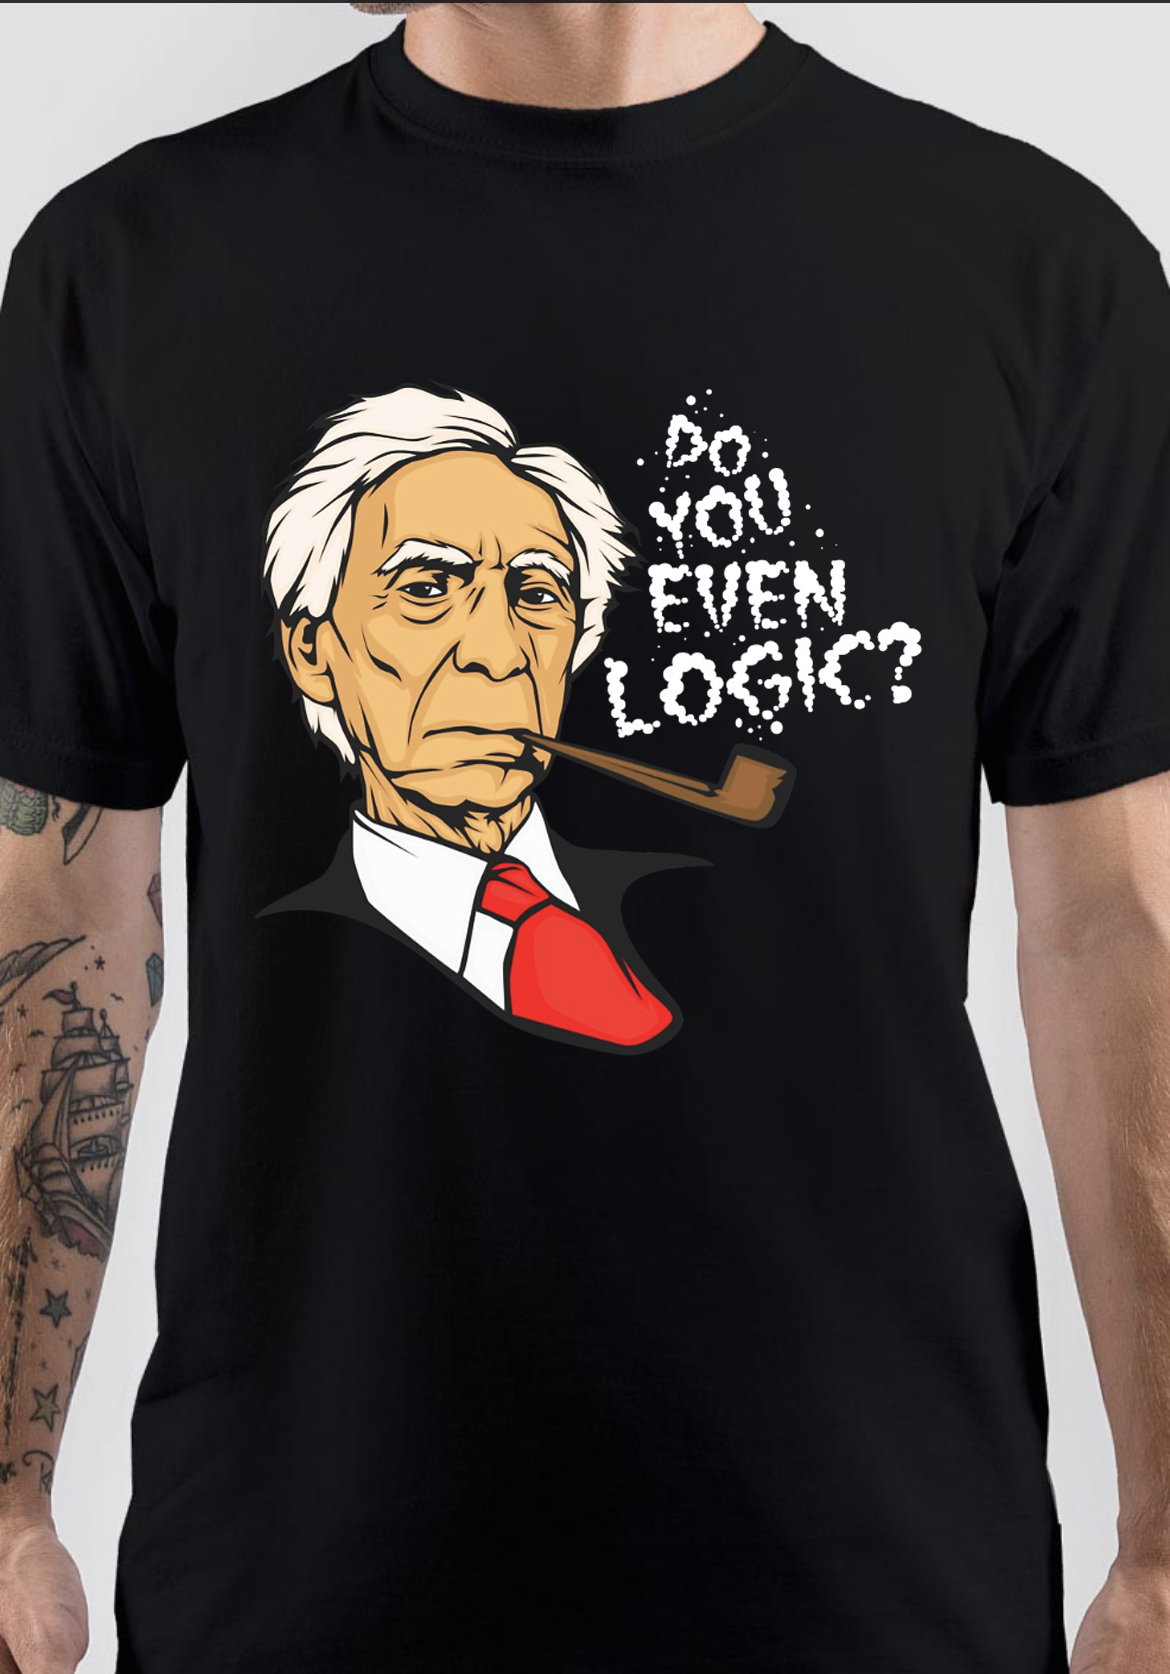 Bertrand Russell T-Shirt And Merchandise